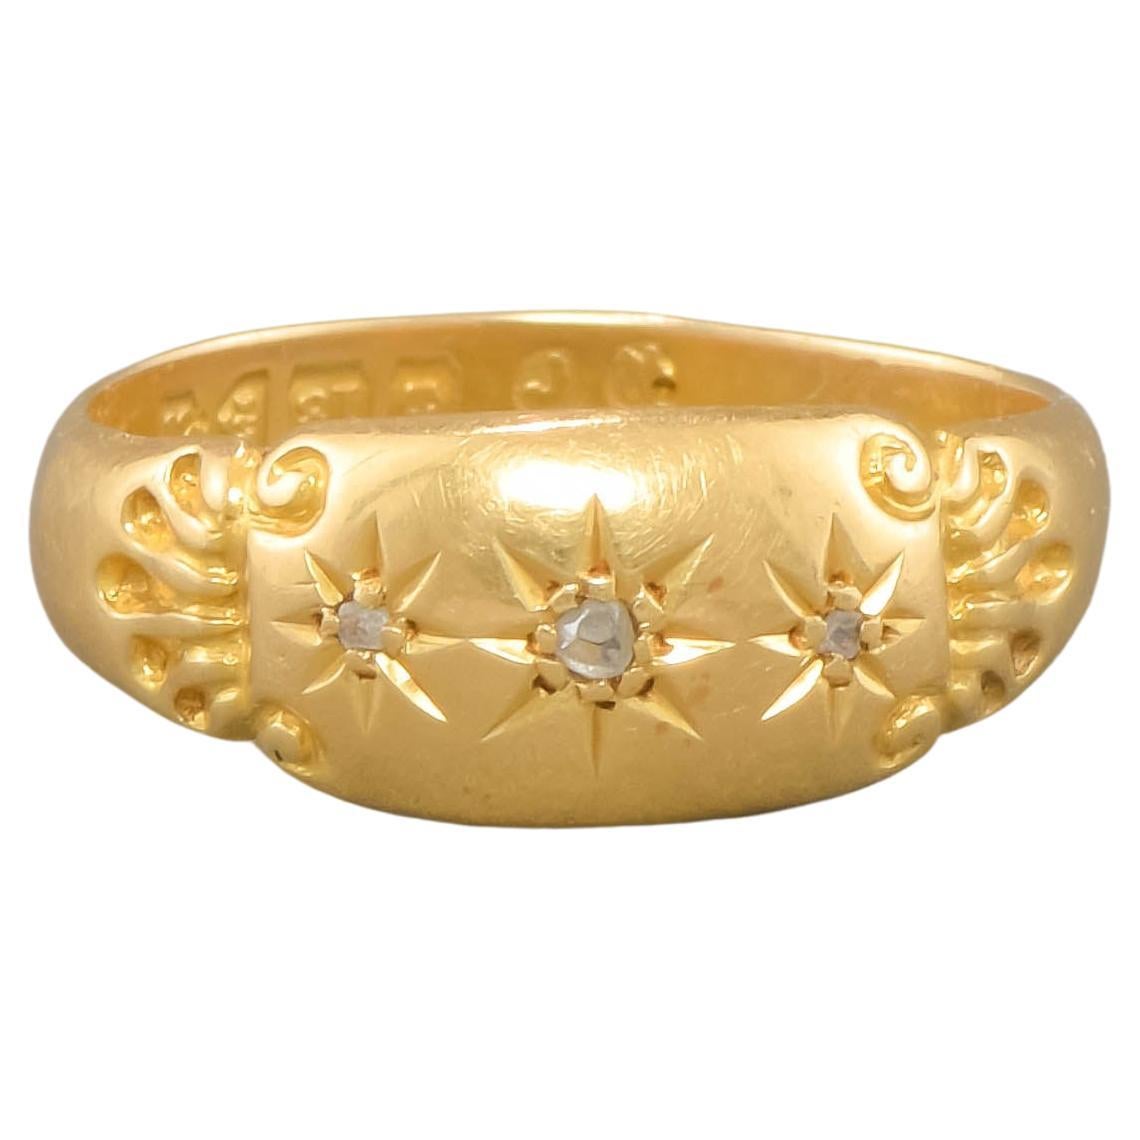 Edwardian 18K Gold Diamond Band Ring, Hallmarked Chester 1910 - 1911